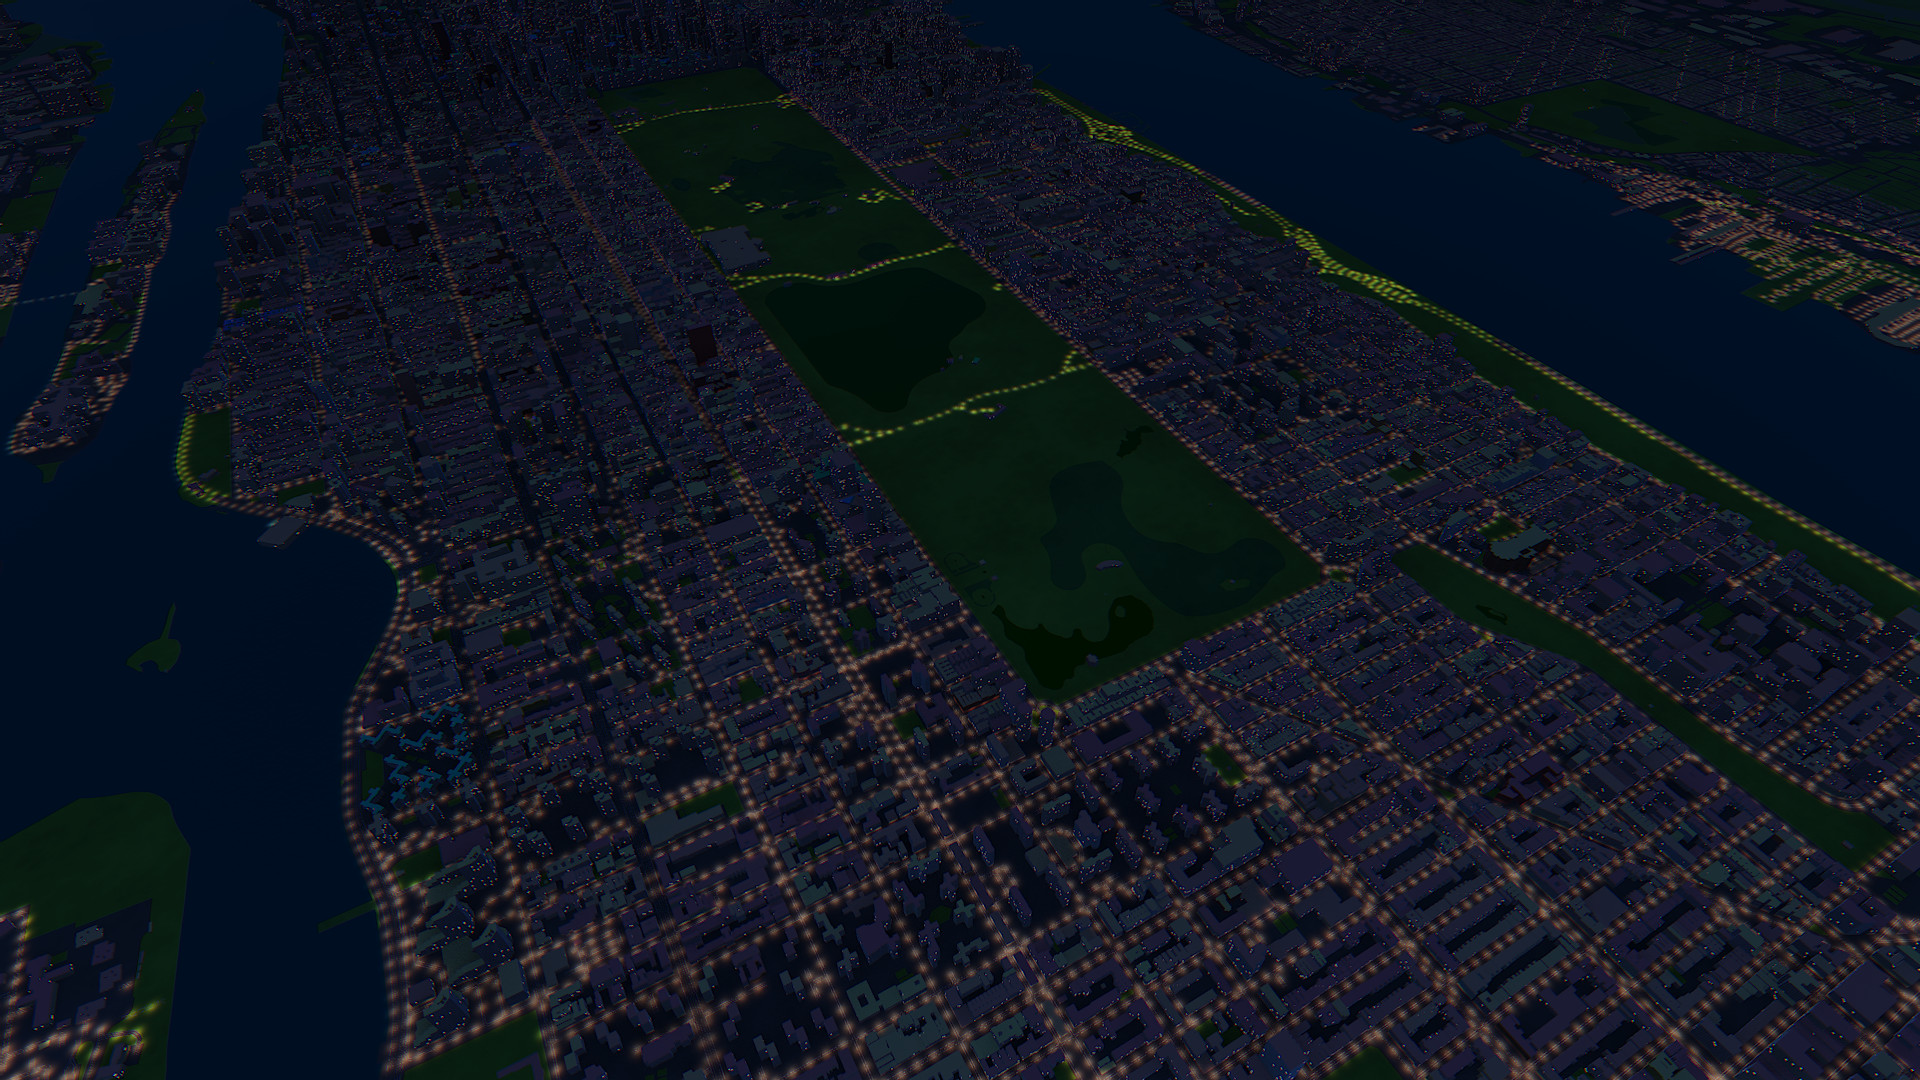 Your city in 3D screenshot